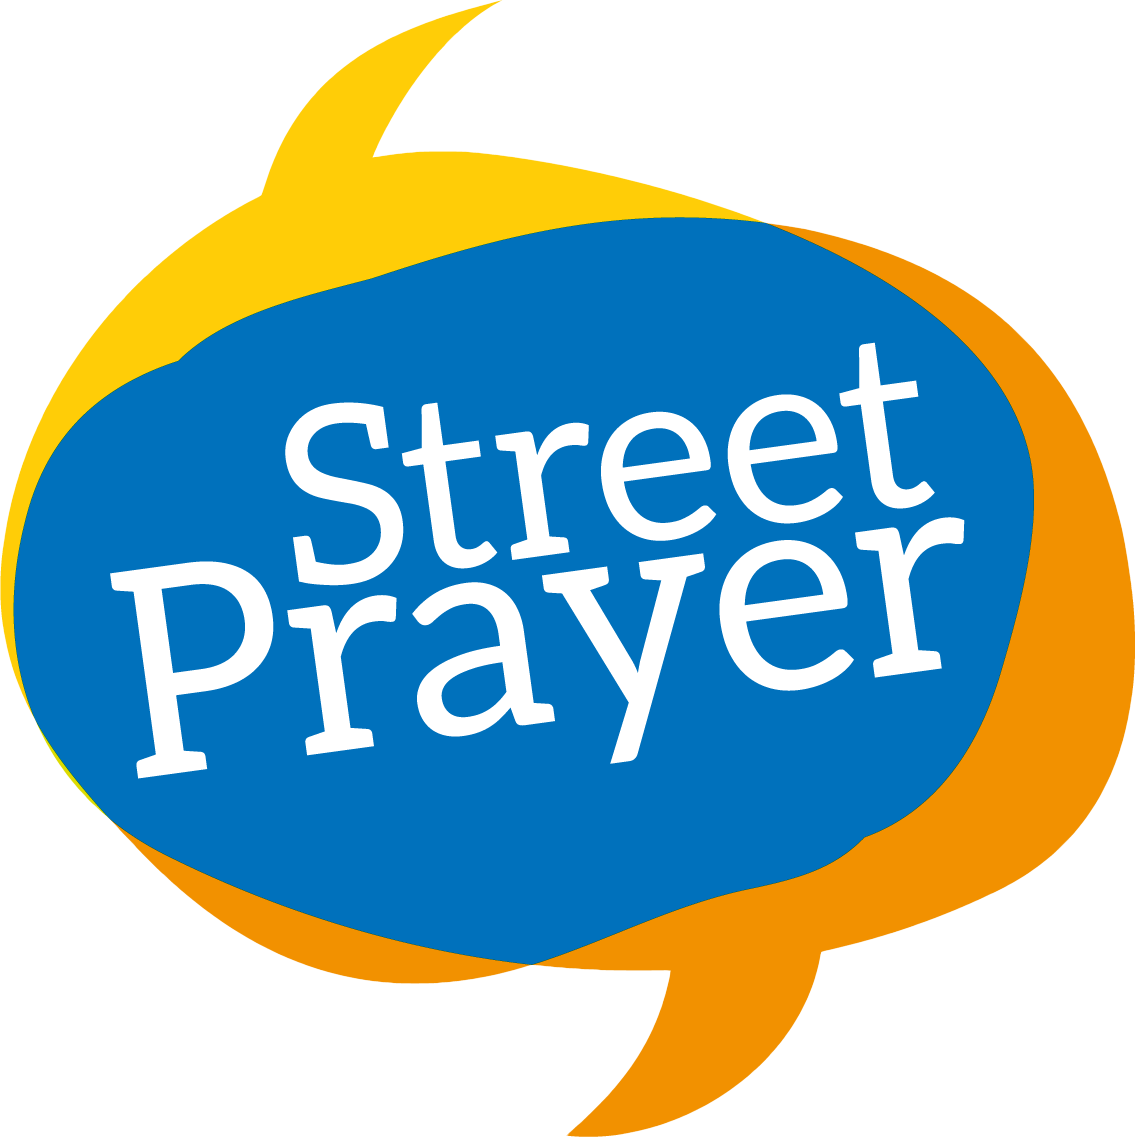 Street Prayer